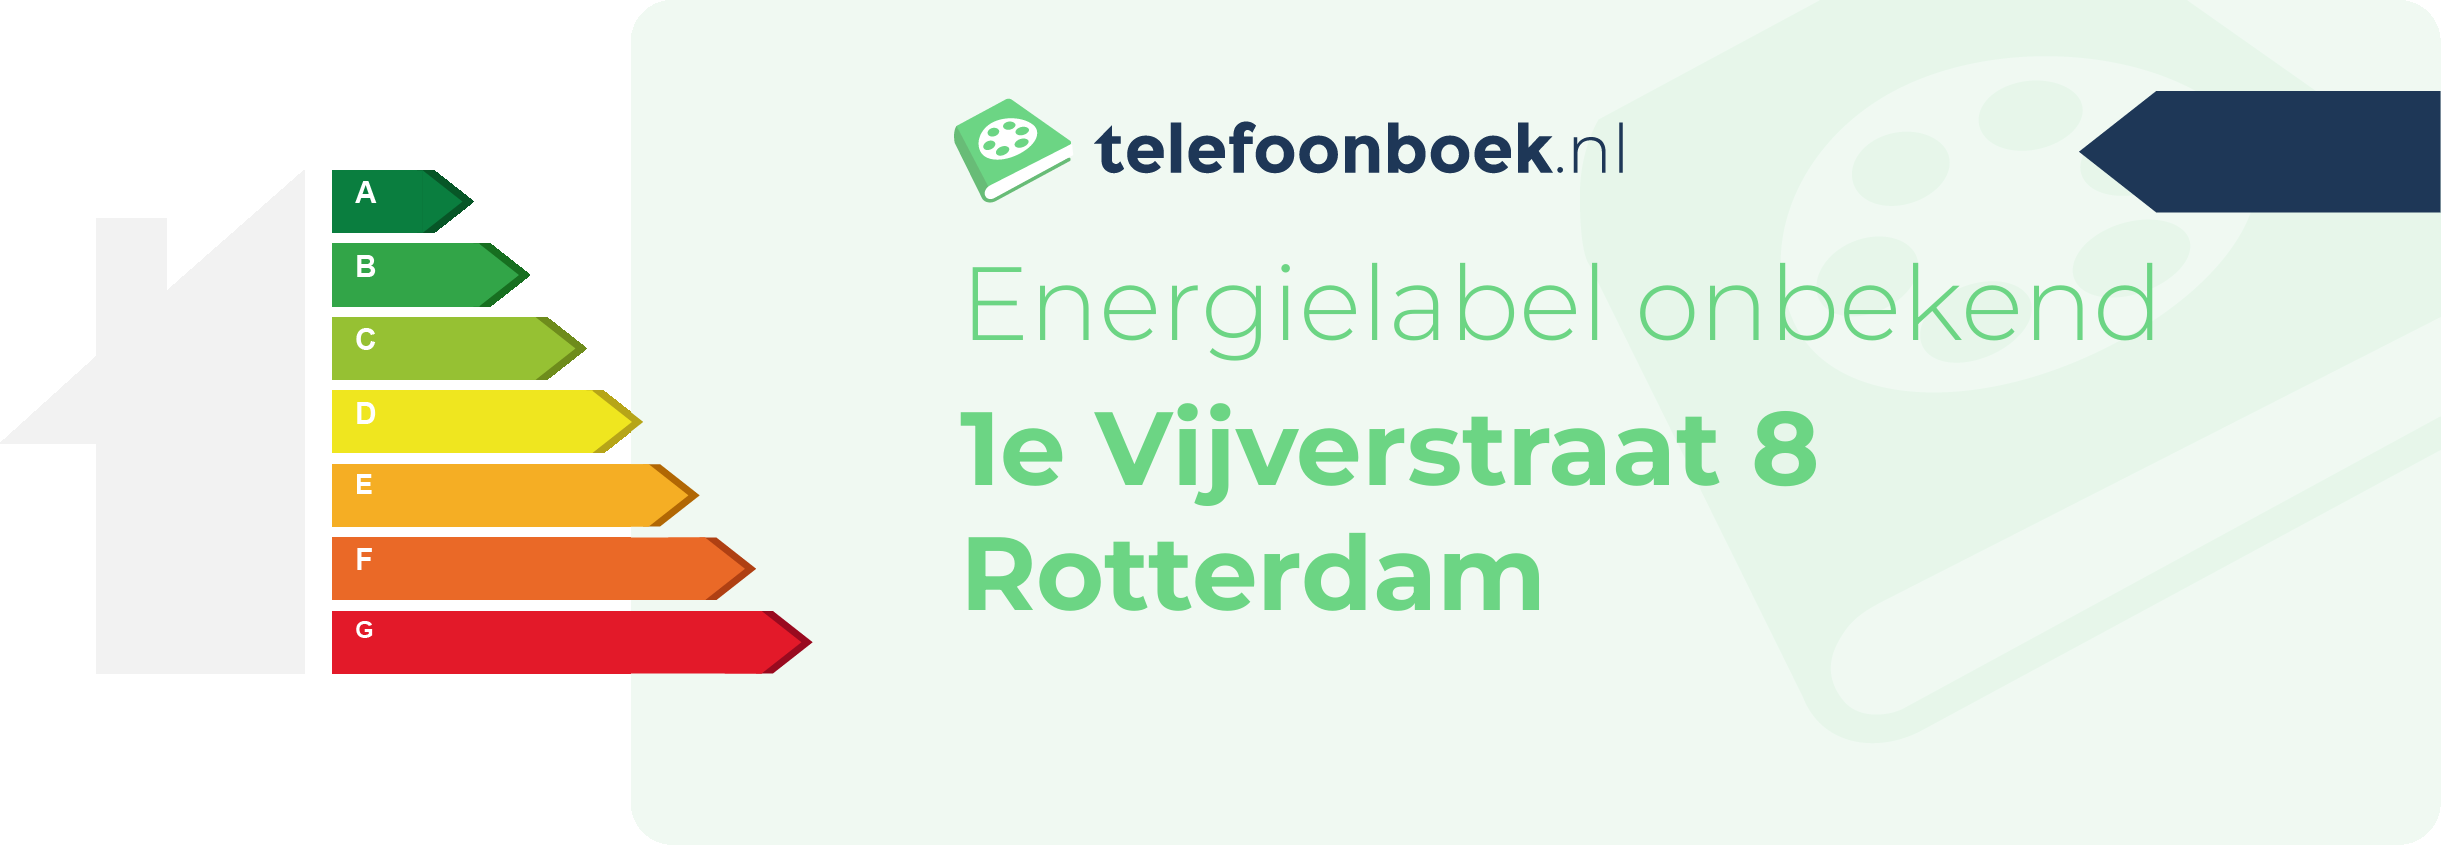 Energielabel 1e Vijverstraat 8 Rotterdam